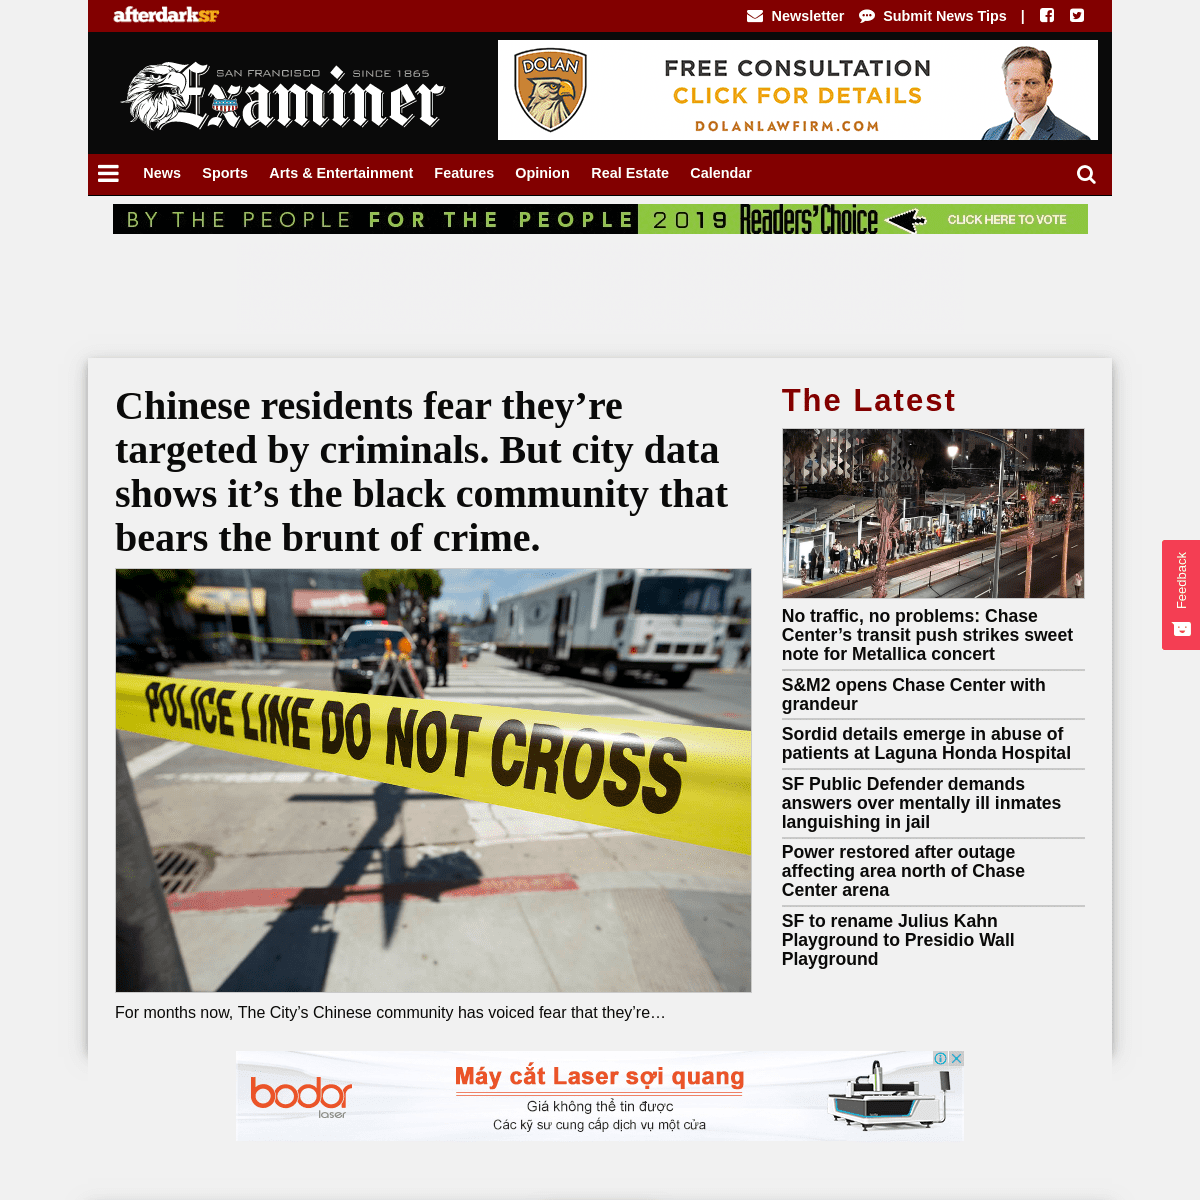 The San Francisco Examiner – San Francisco and Bay Area News